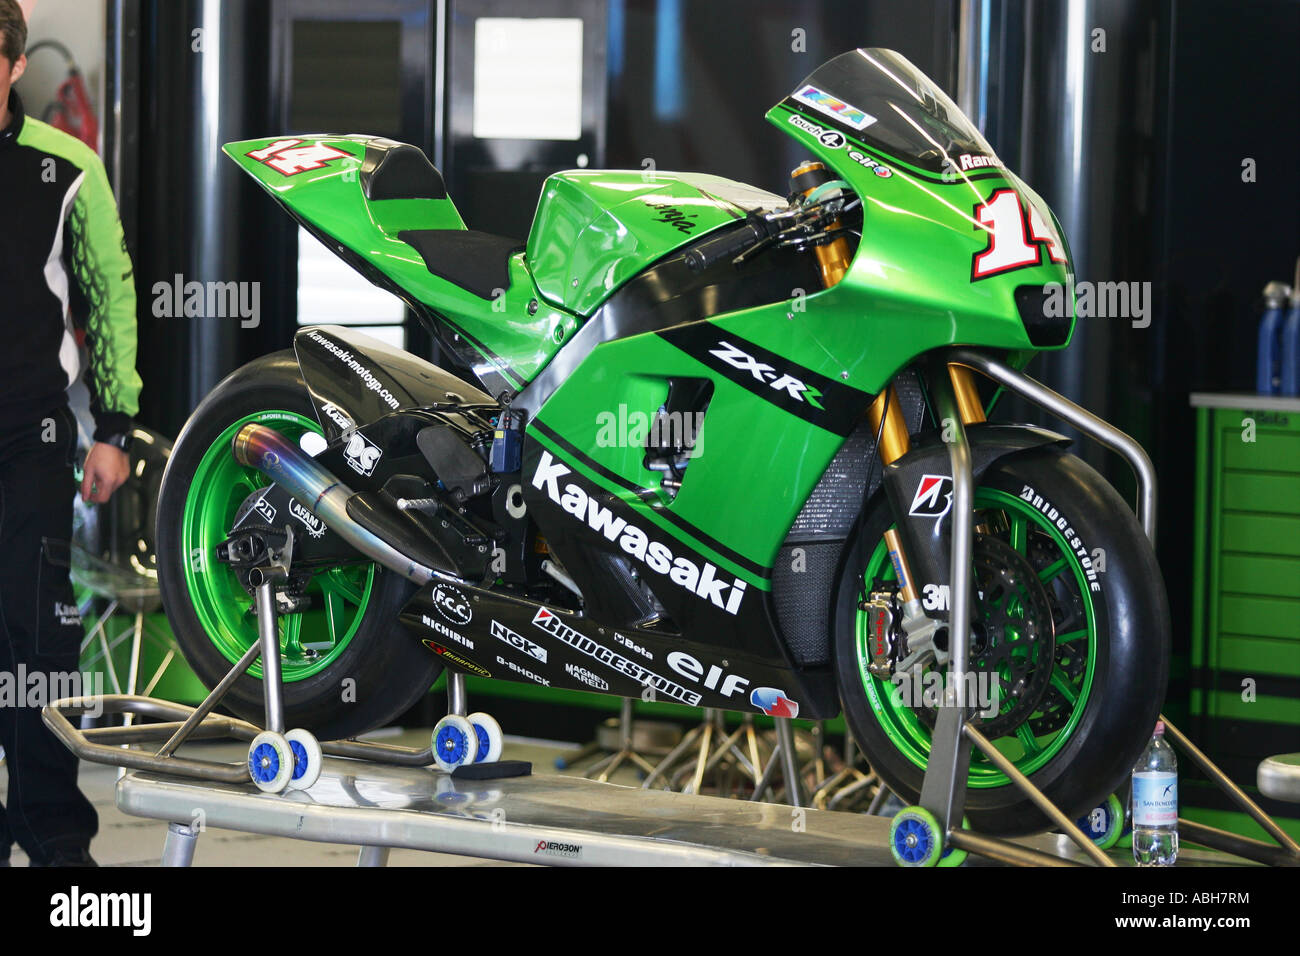 Tilståelse inerti finansiere Kawasaki Motogp bike 2007 season Stock Photo - Alamy